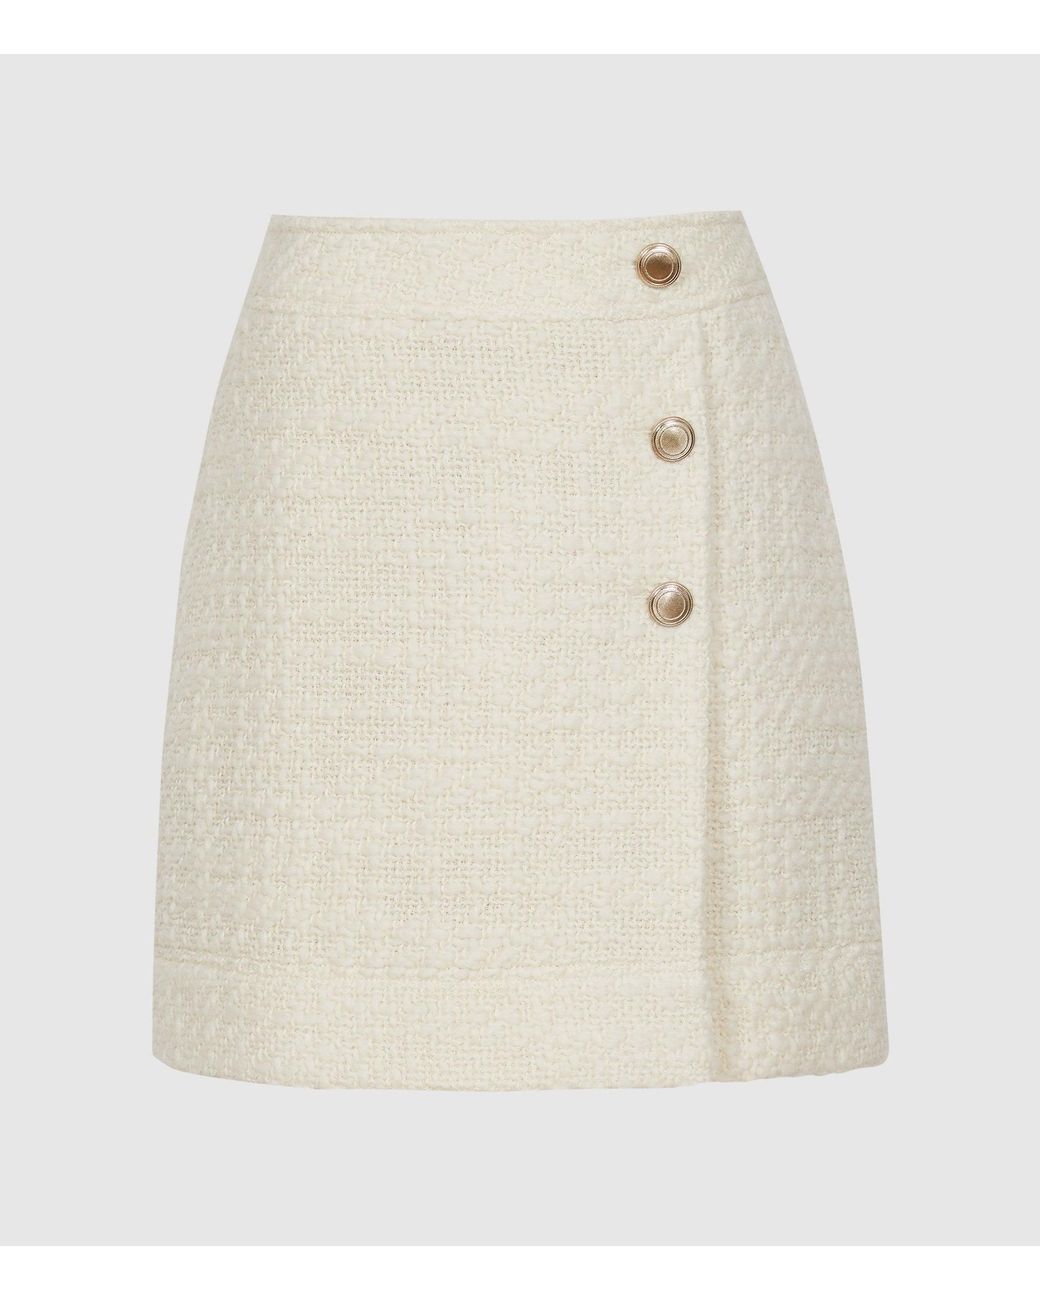 Reiss June - Boucle Mini Skirt in Natural | Lyst